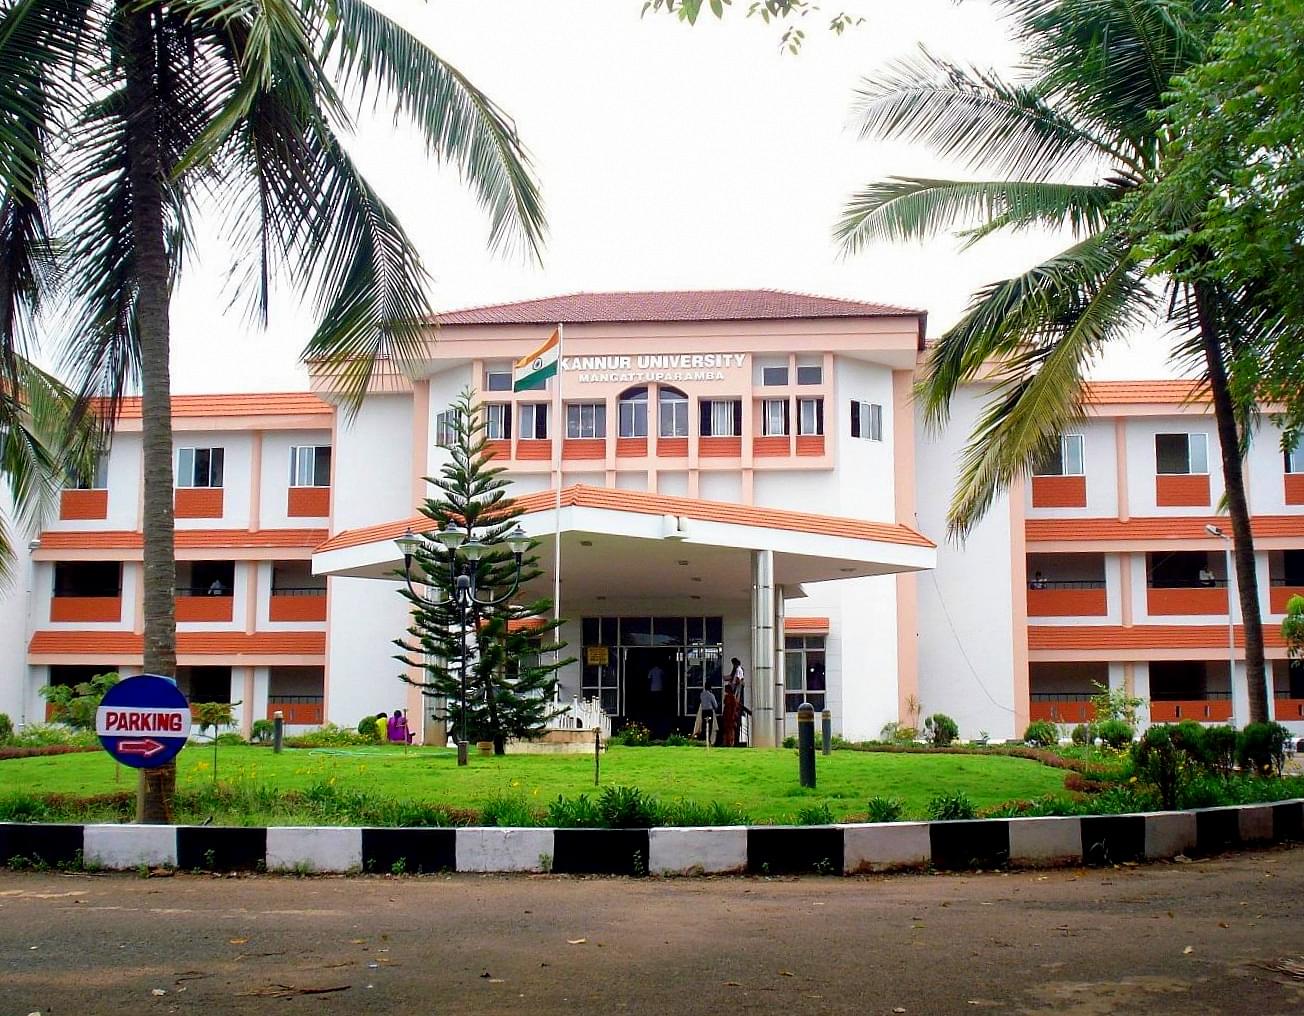 kannur university admission distance education